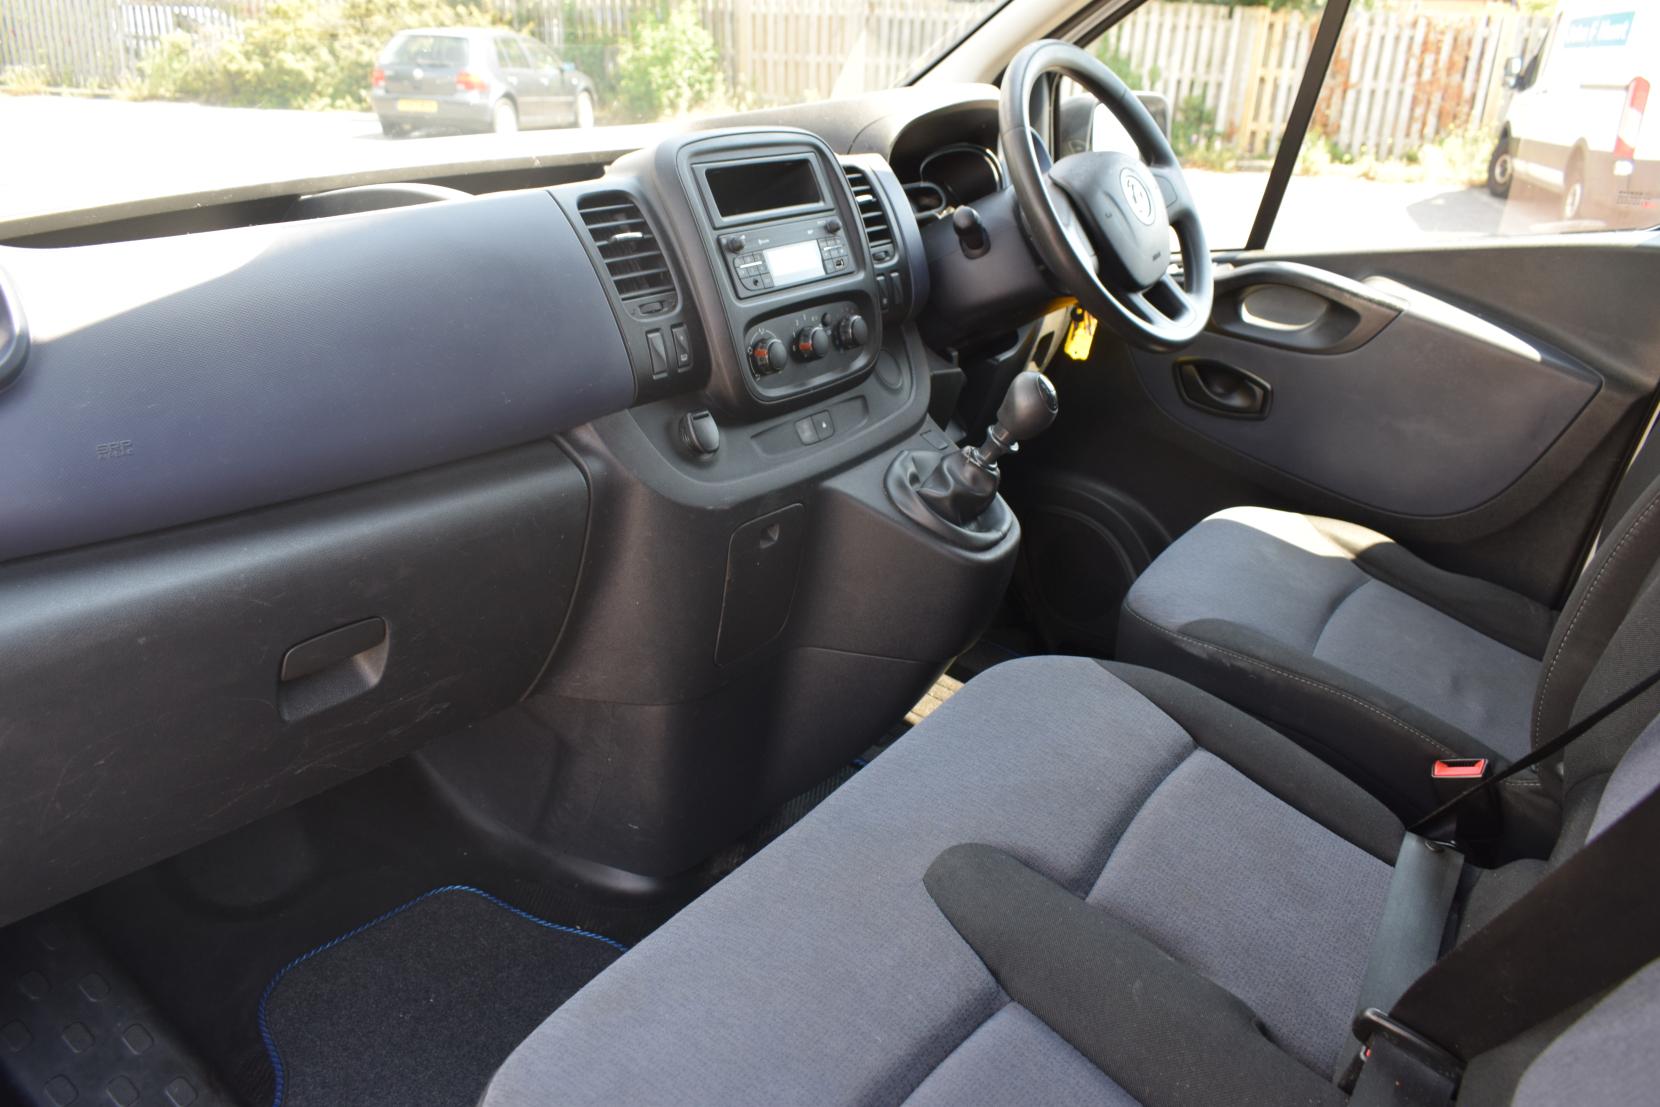 Vauxhall Vivaro 1.6 CDTi 2900 ecoFLEX Temperature Controlled 5dr Diesel Manual L1 H1 (s/s) (160 g/km, 89 bhp)